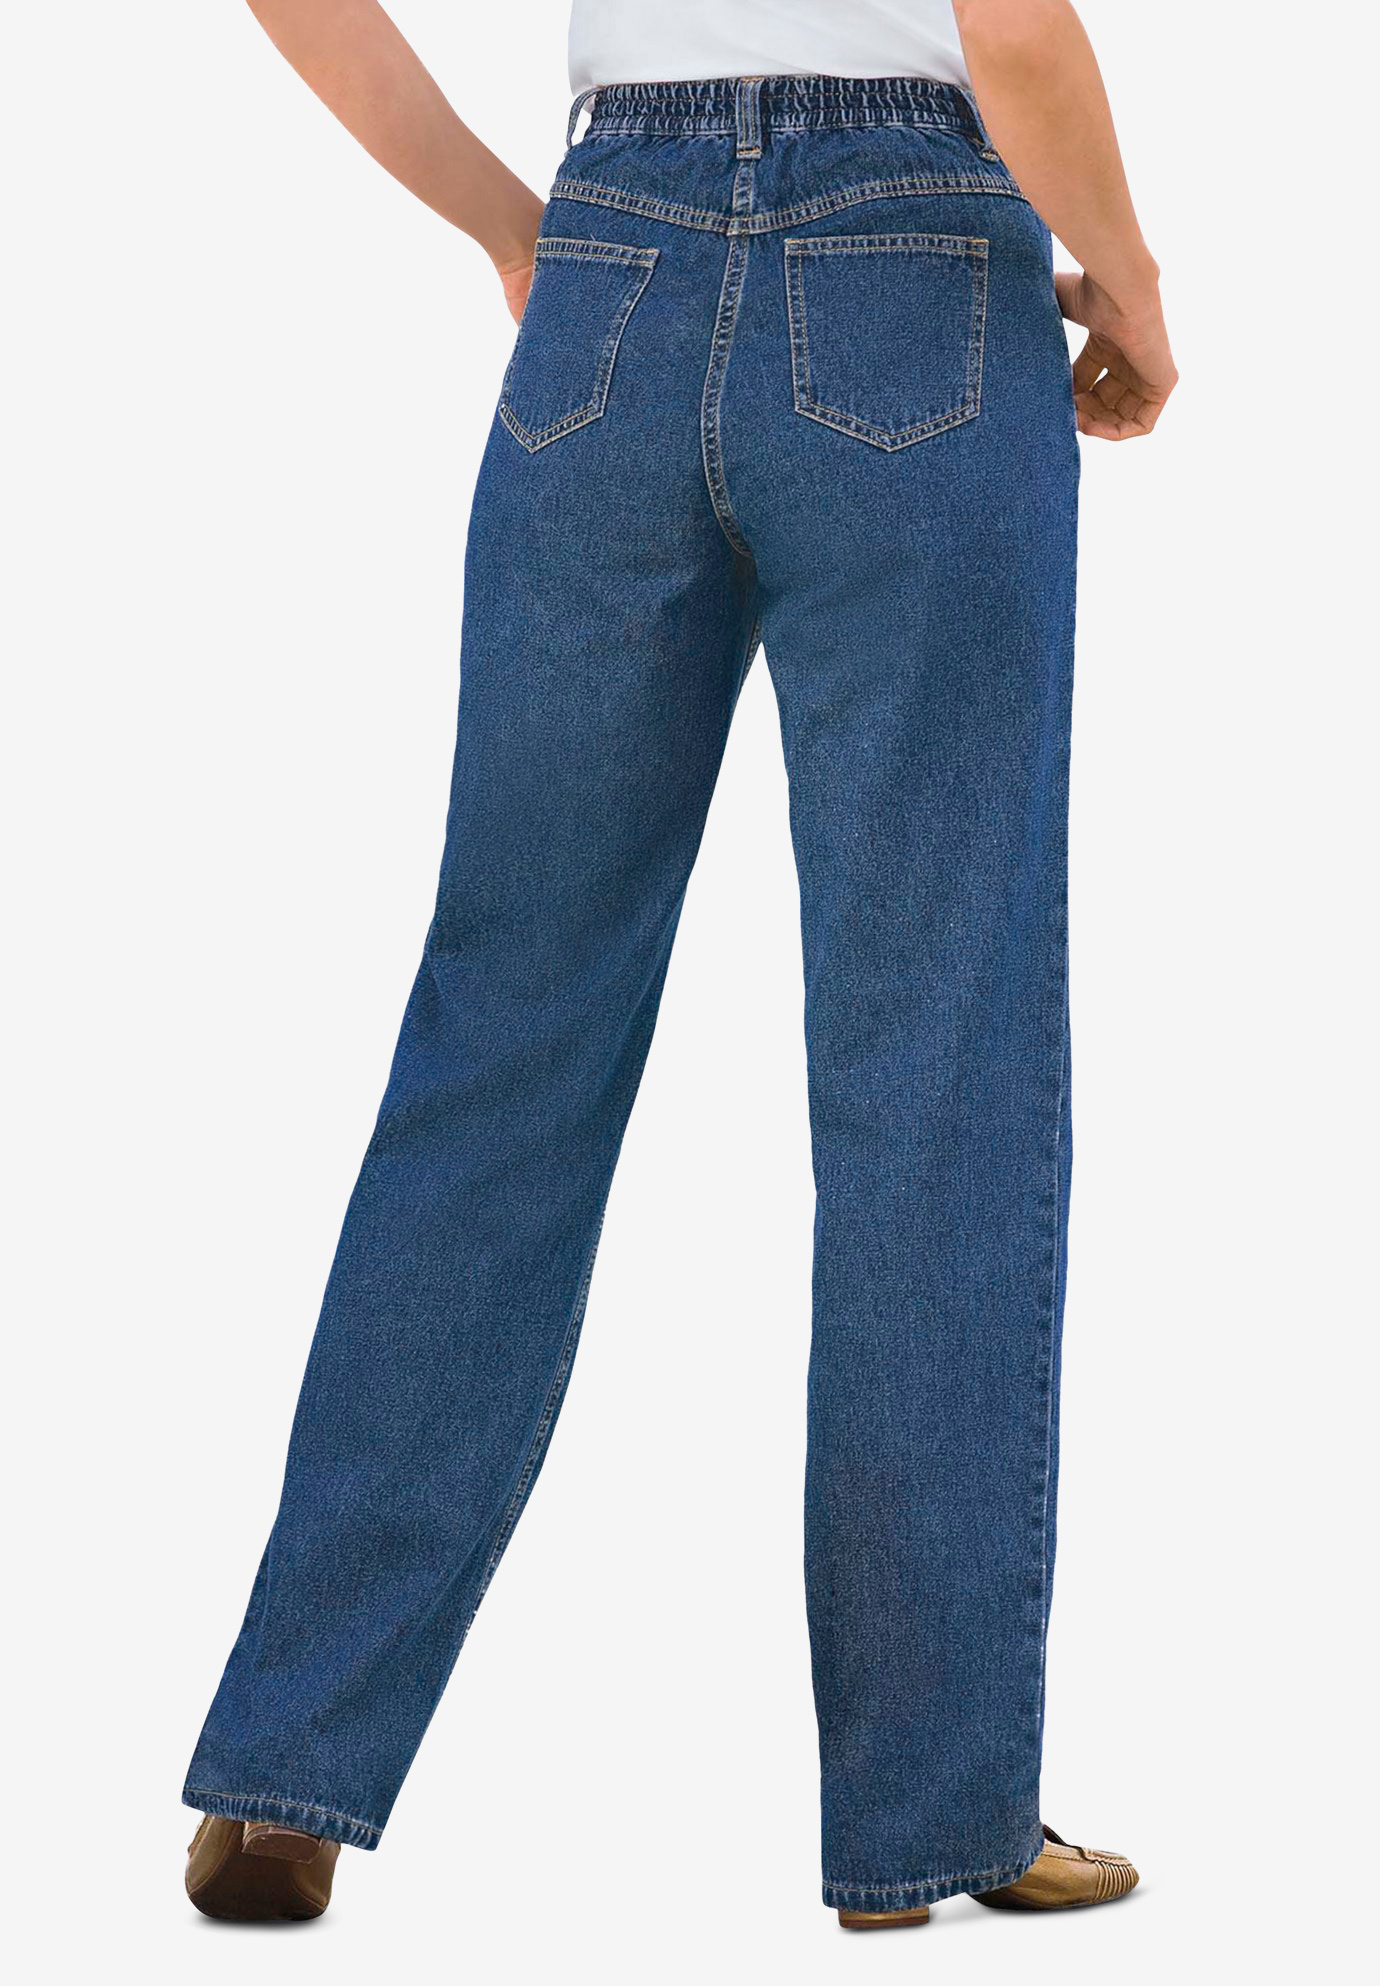 elastic for jeans waist